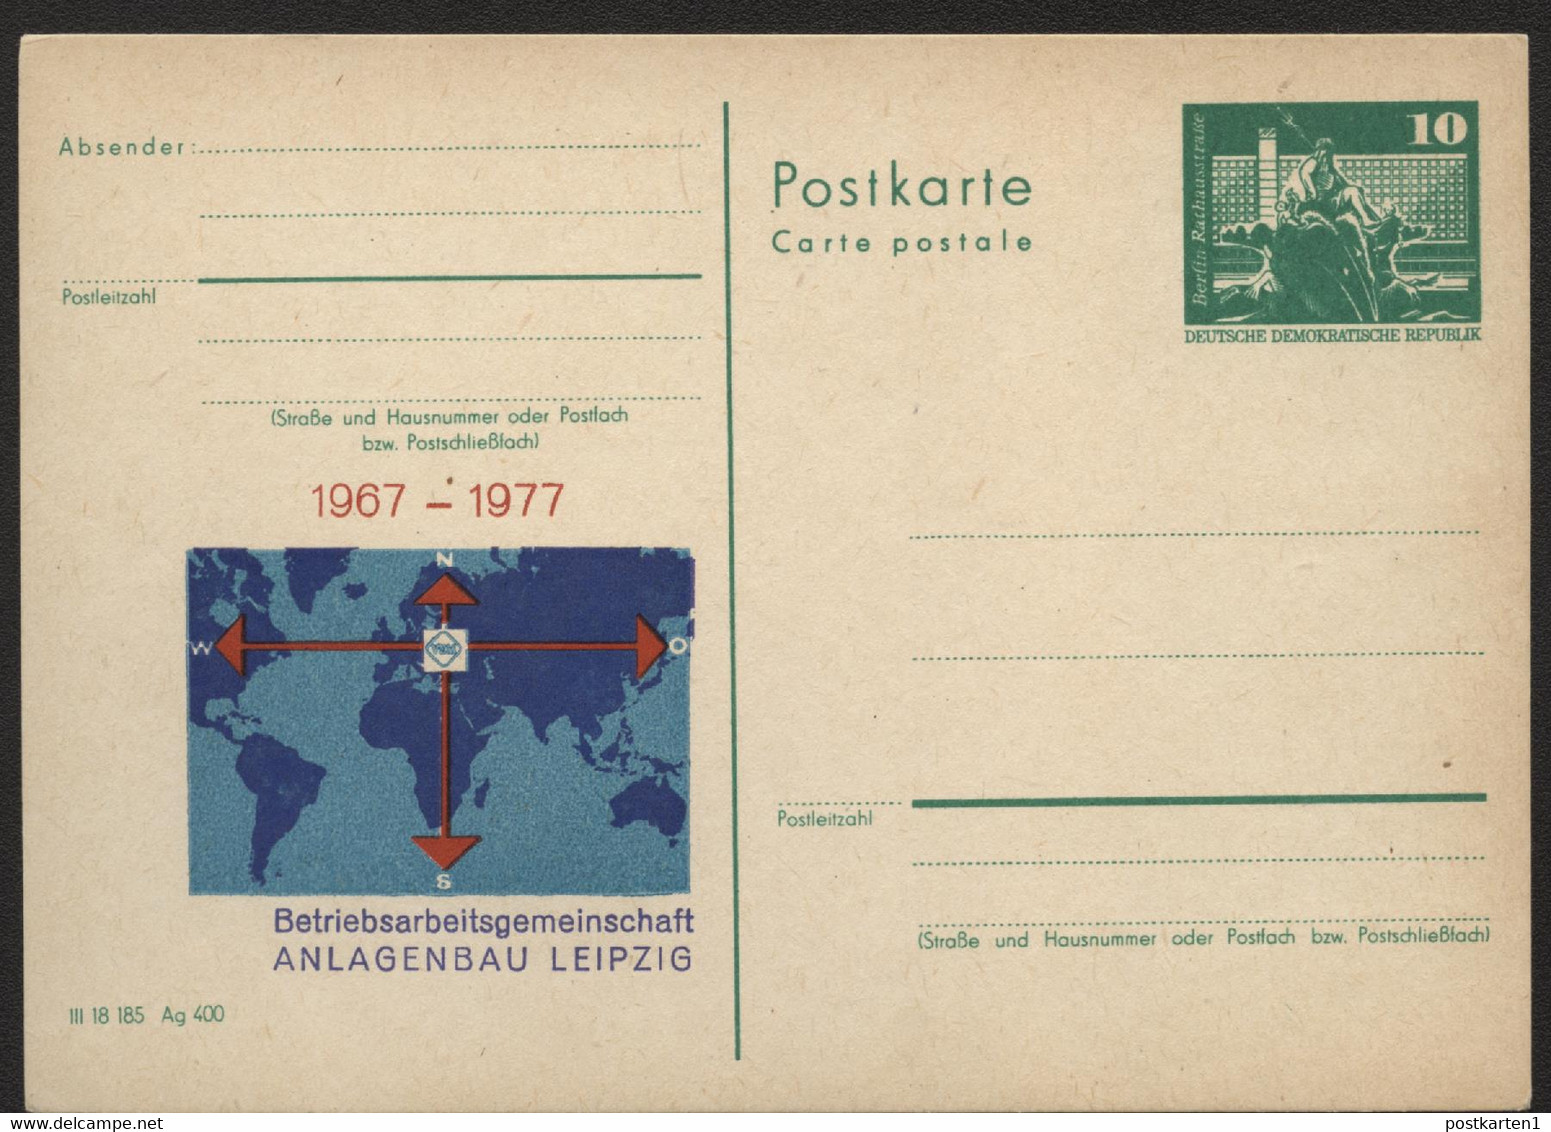 Postkarte P79 C45a ANLAGENBAU LEIPZIG Postfrisch 1977 - Cartoline Private - Usati